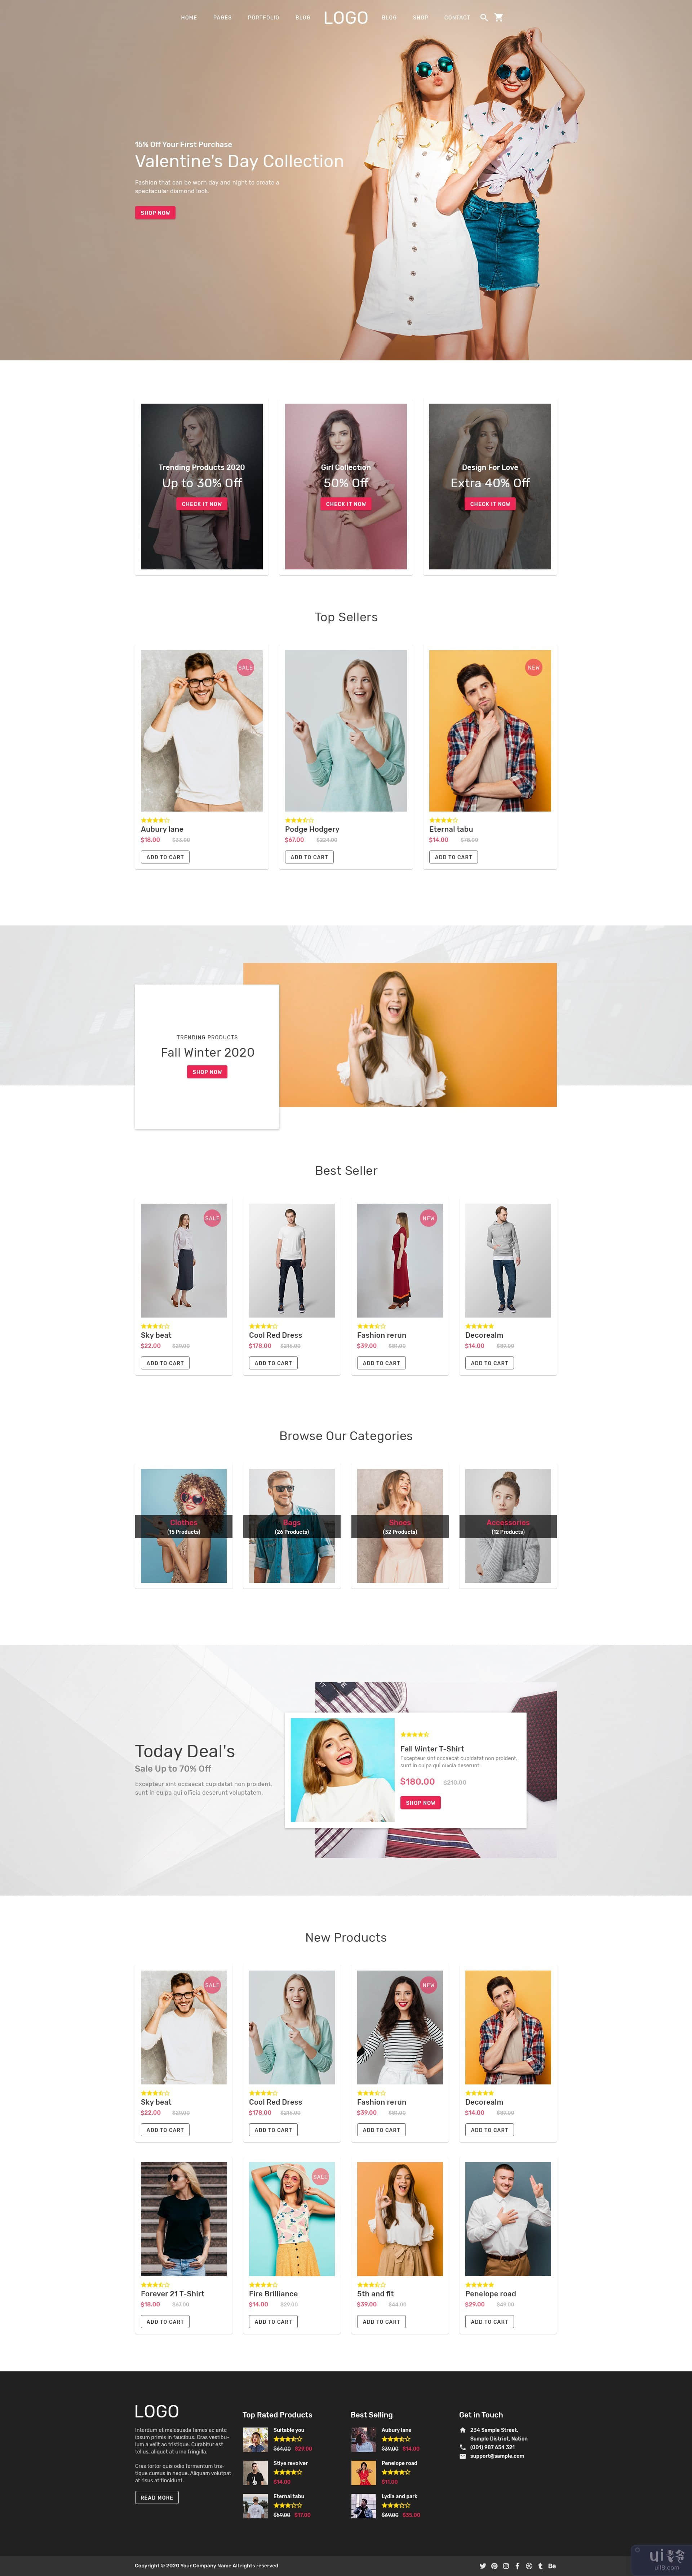 Kella 时装店主页 PSD Web 模板(Kella Fashion Store Homepage PSD Web Template)插图